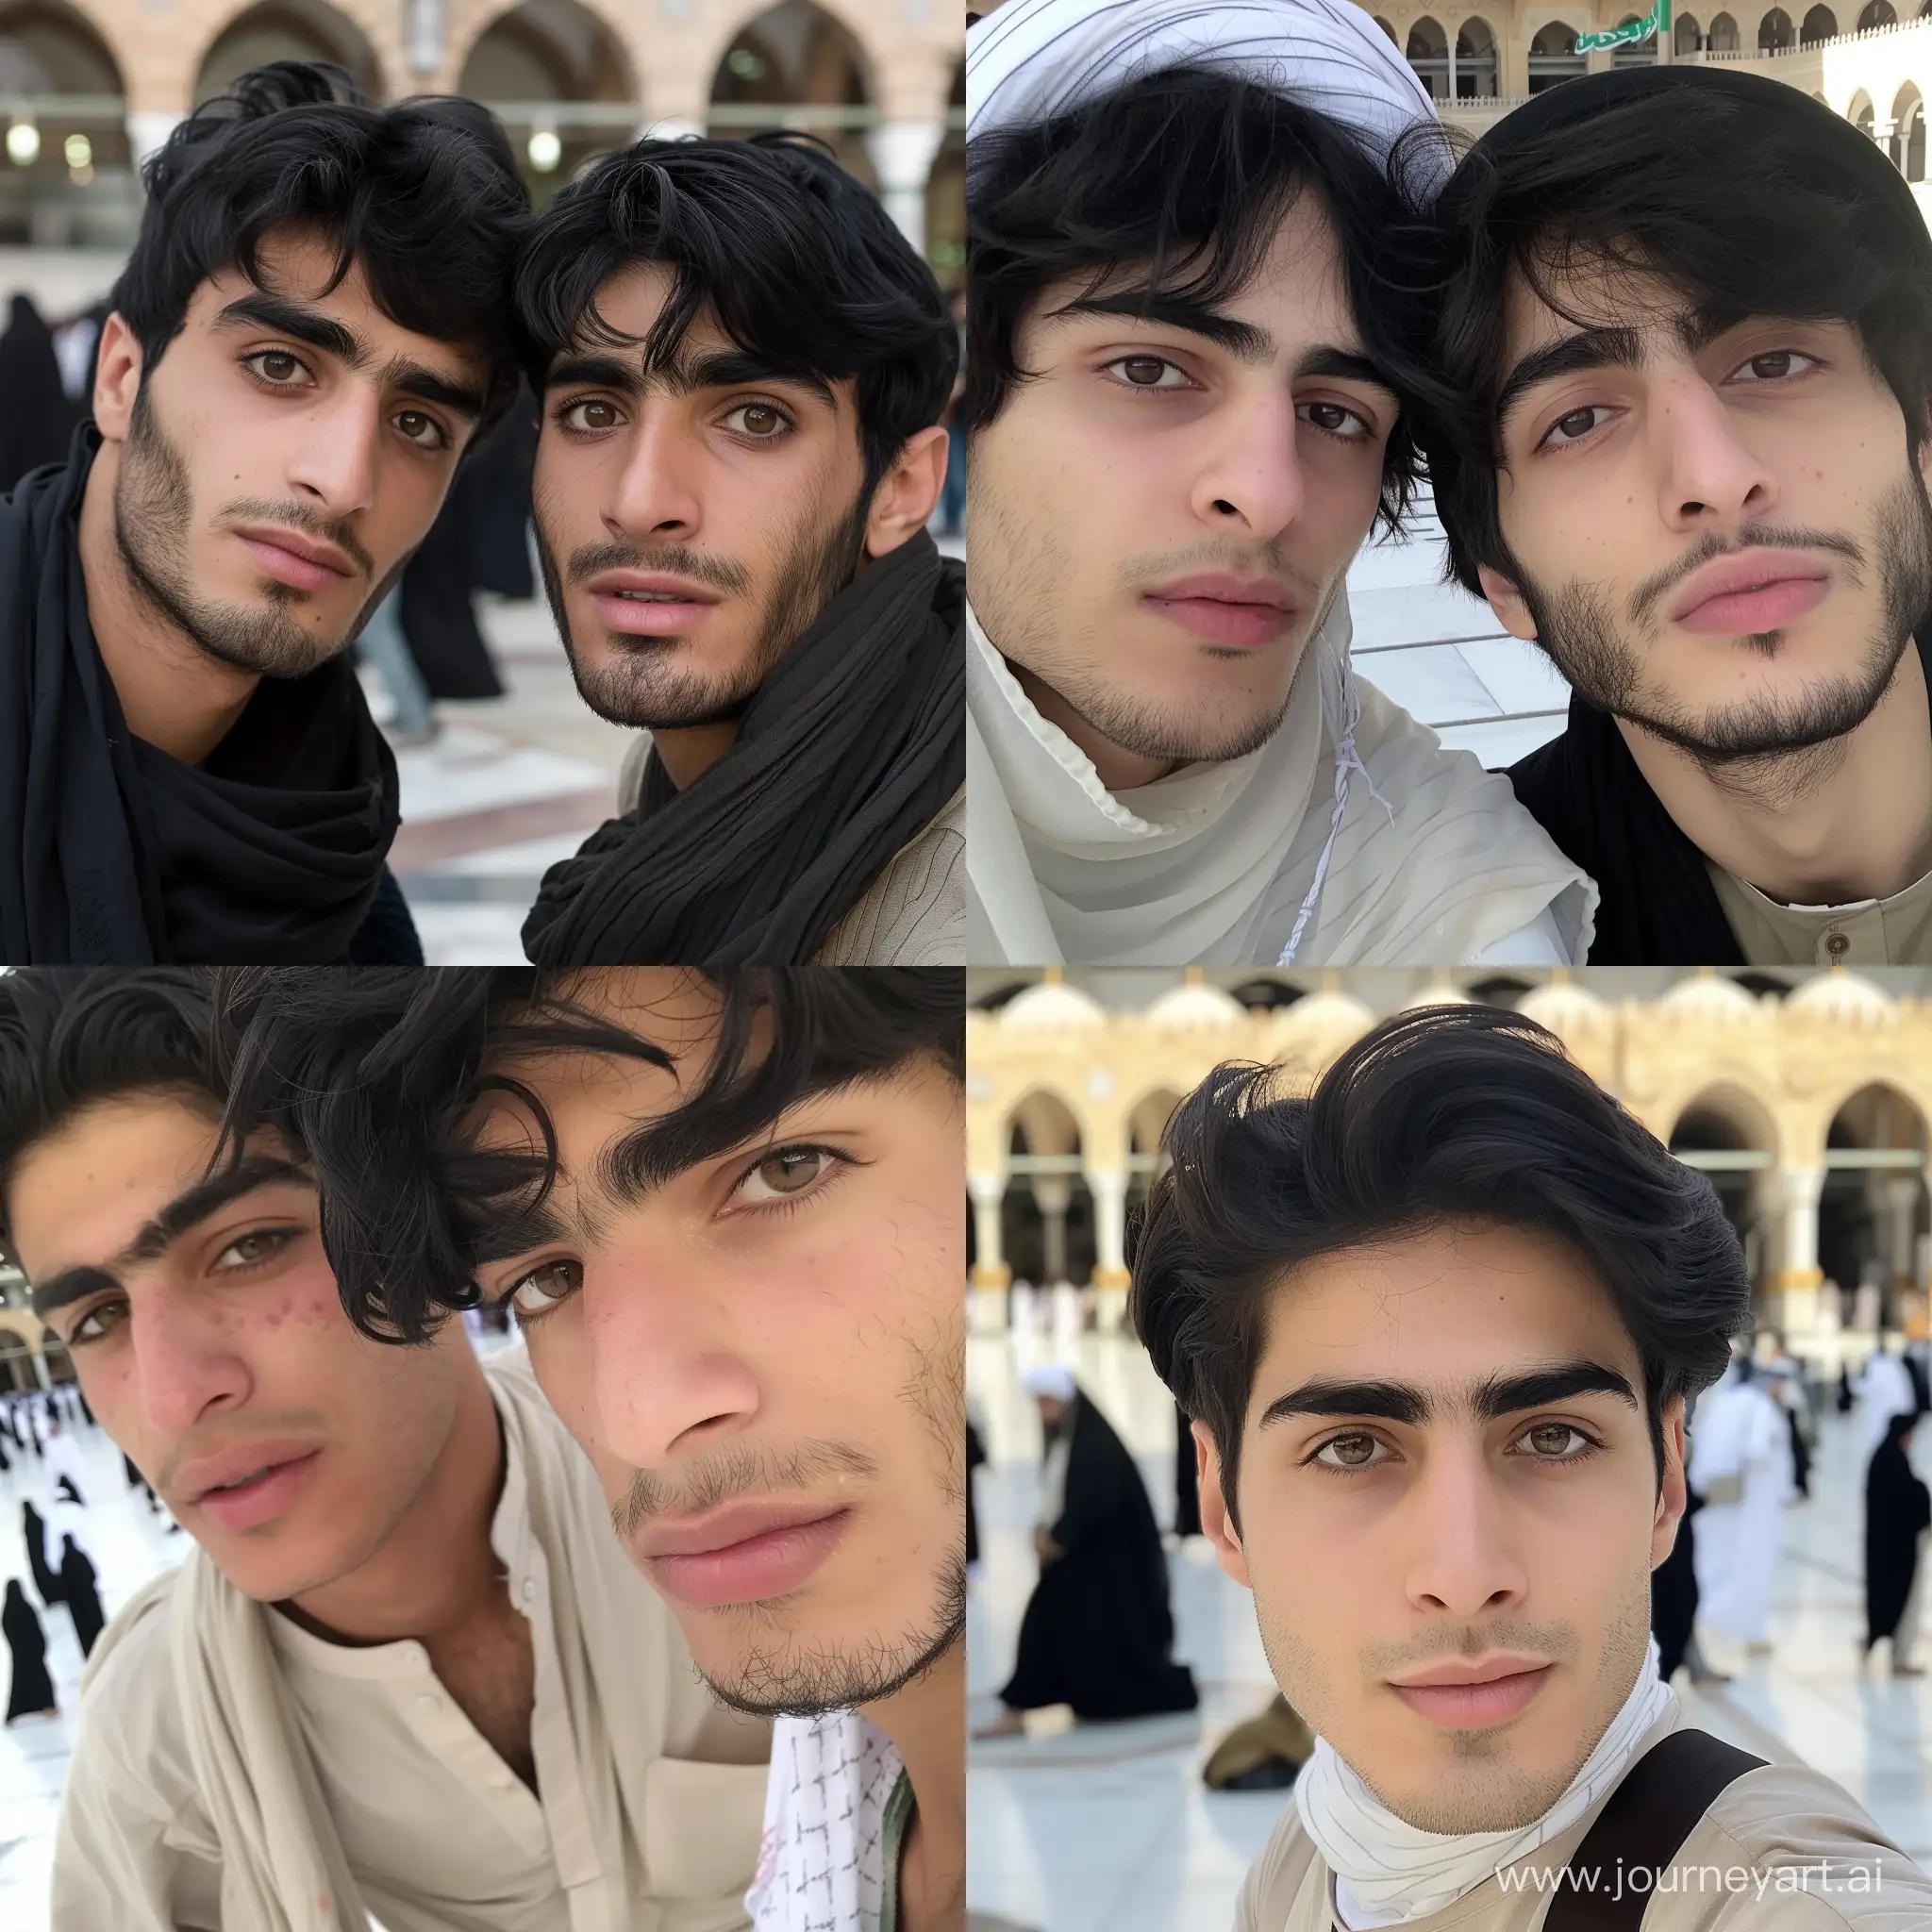 Iranian-Friends-Enjoying-Meccas-Vibrant-Atmosphere